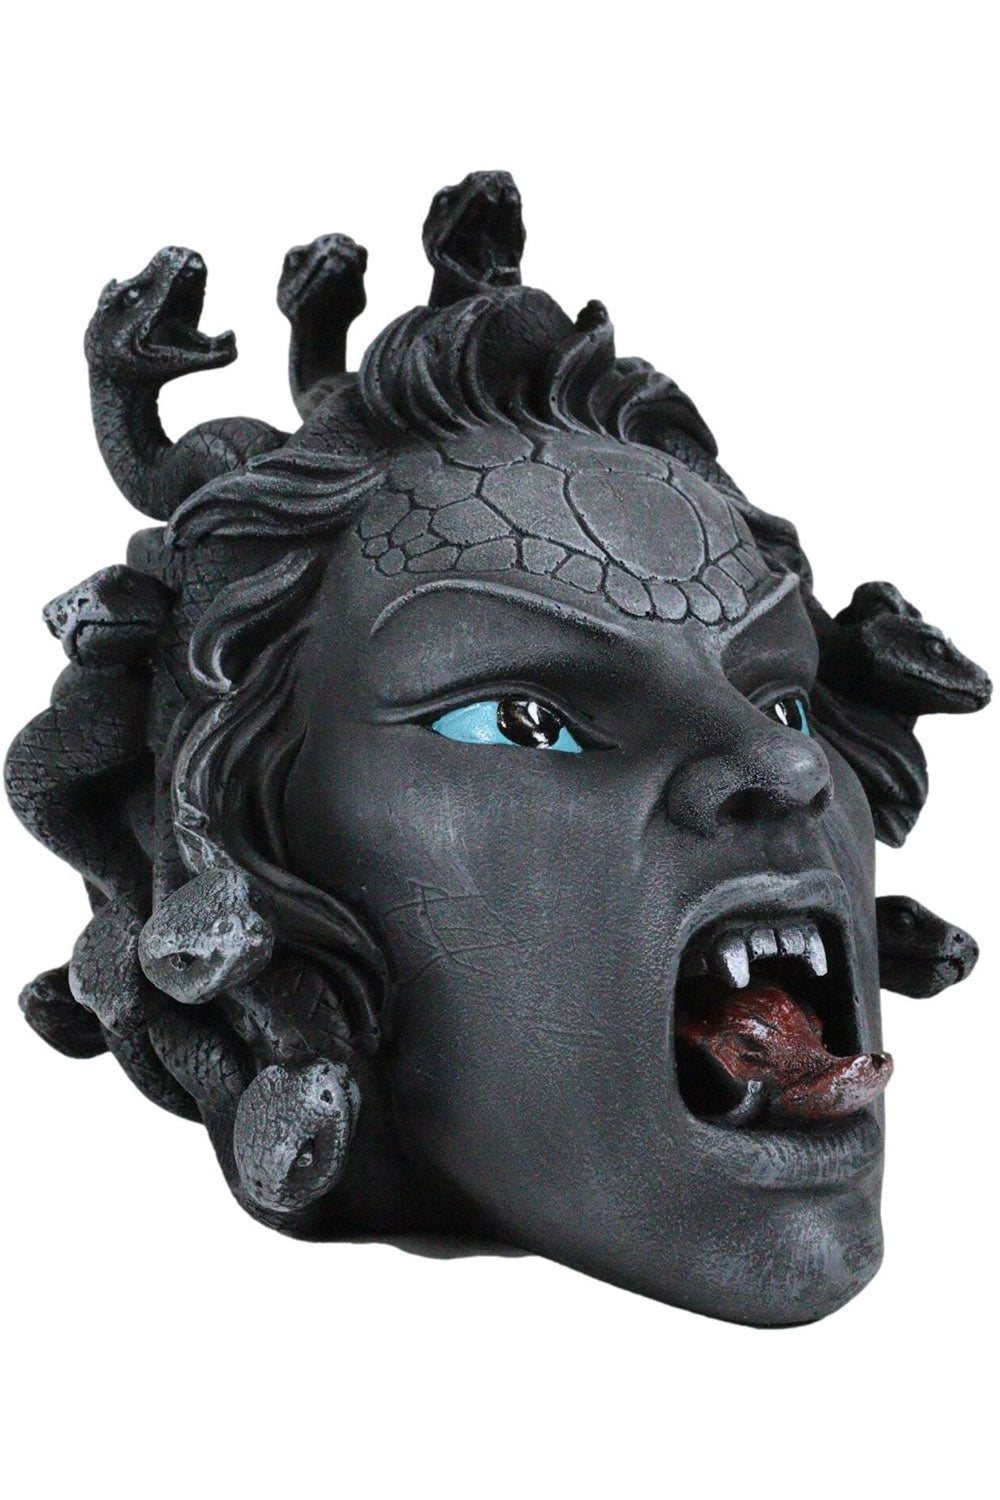 Medusa's Head Sculpture